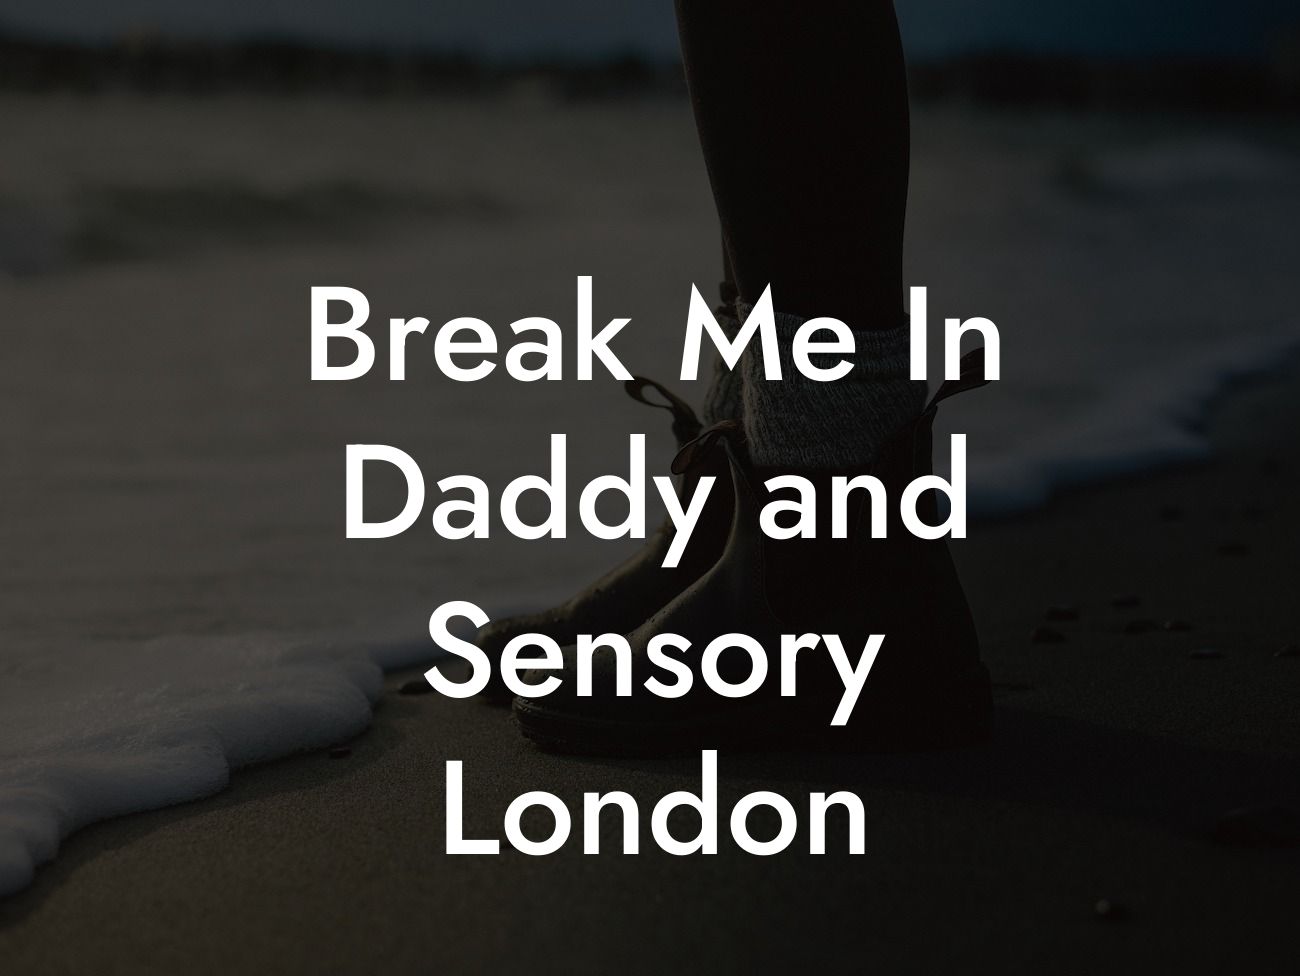 Break Me In Daddy and Sensory London